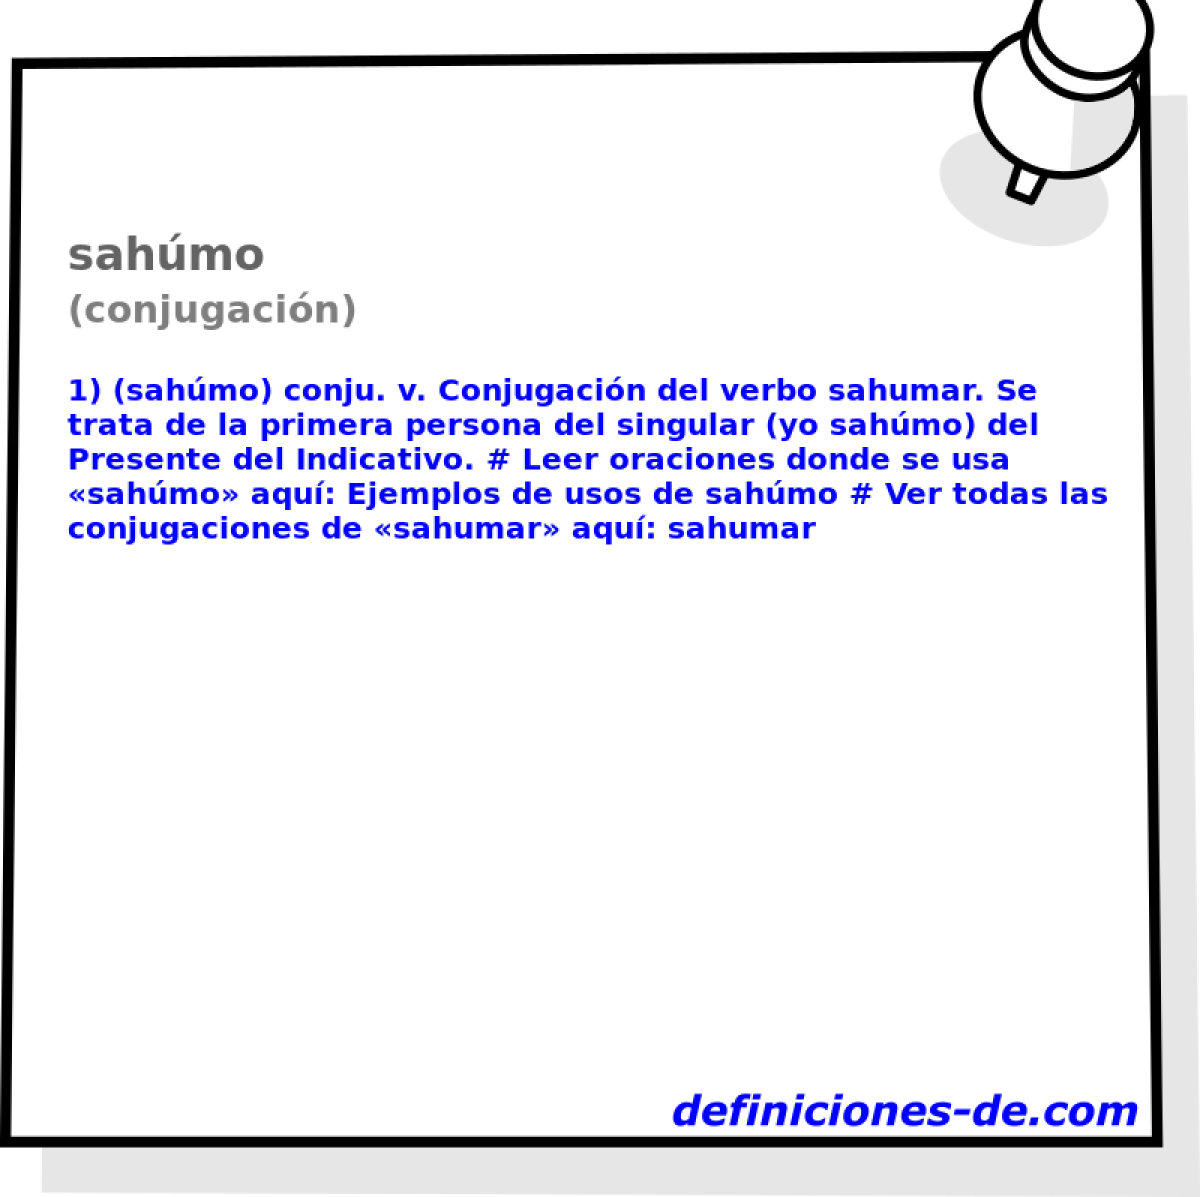 sahmo (conjugacin)